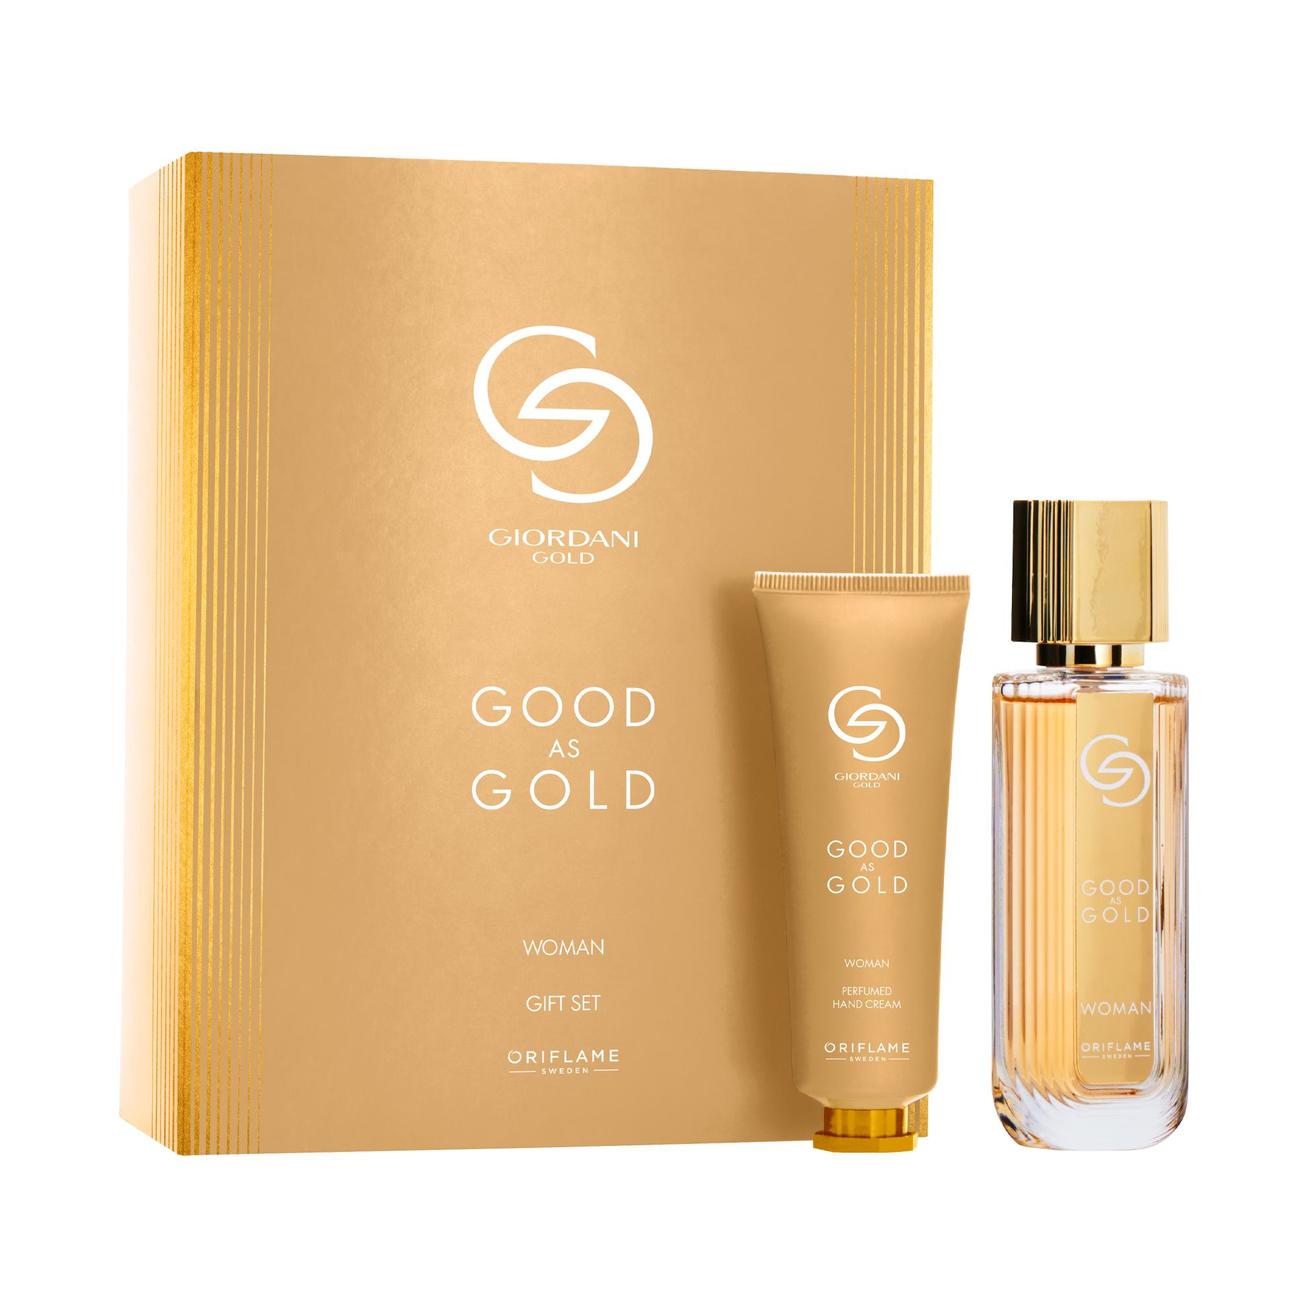 Tilbud: Good as Gold Woman Gift Set kr 829 på Oriflame